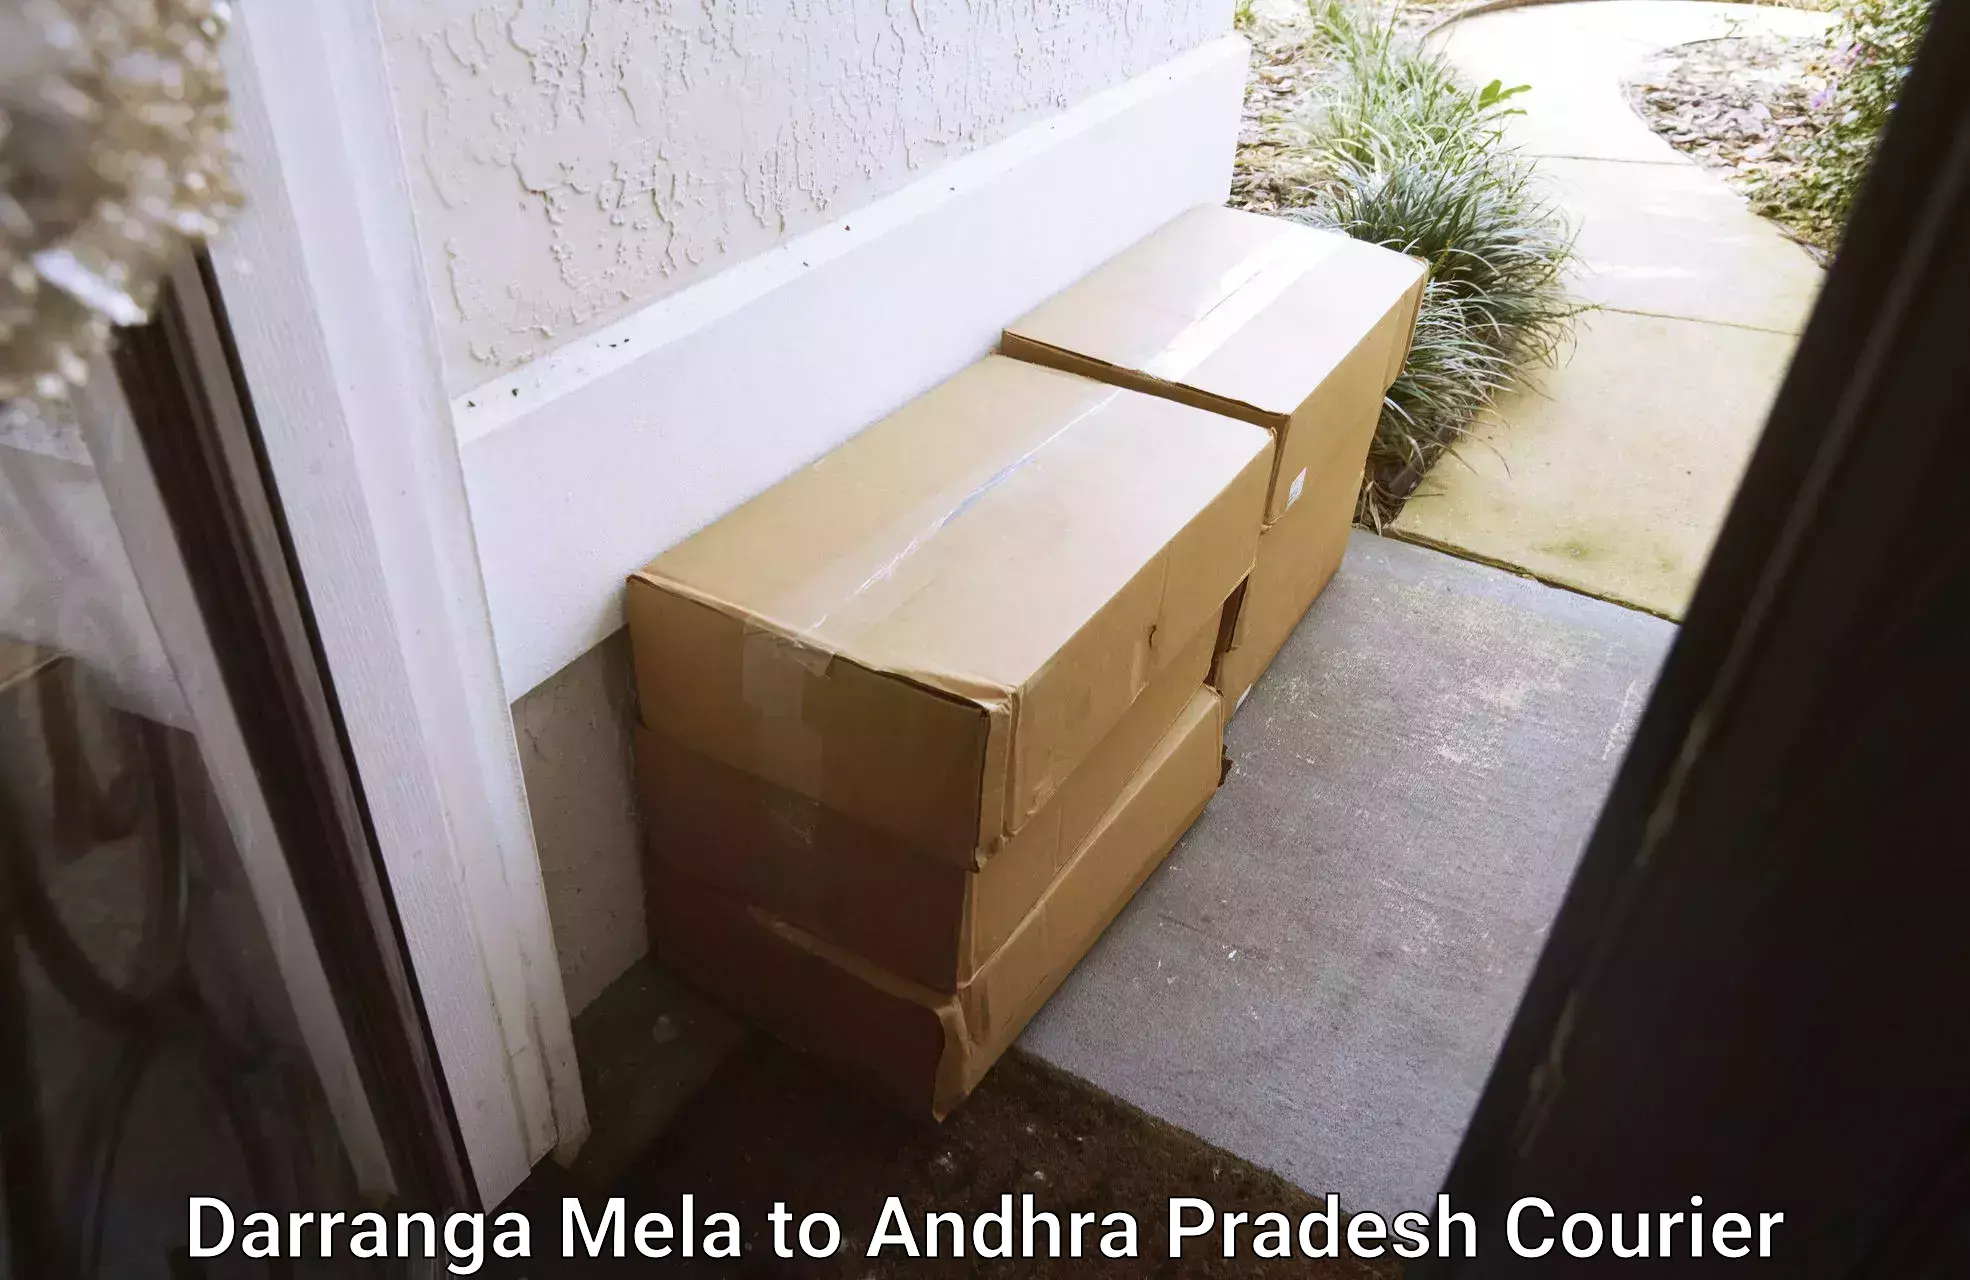 Reliable delivery network Darranga Mela to Allagadda